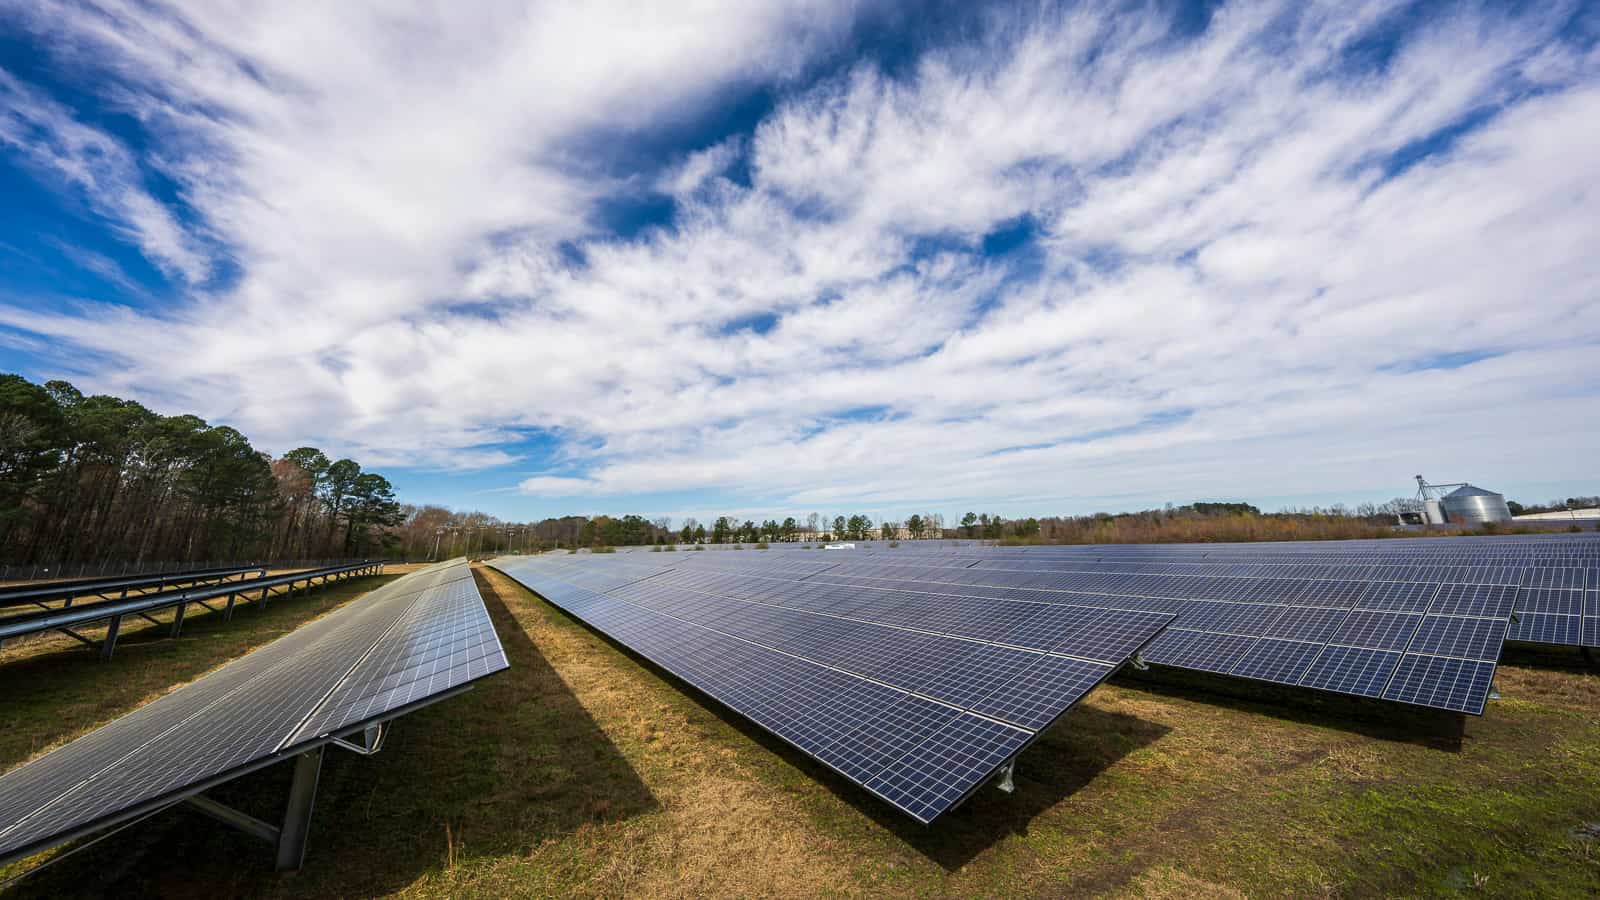 solarbank community solar ground-mounted solar panels - photo by Mark Stebnicki